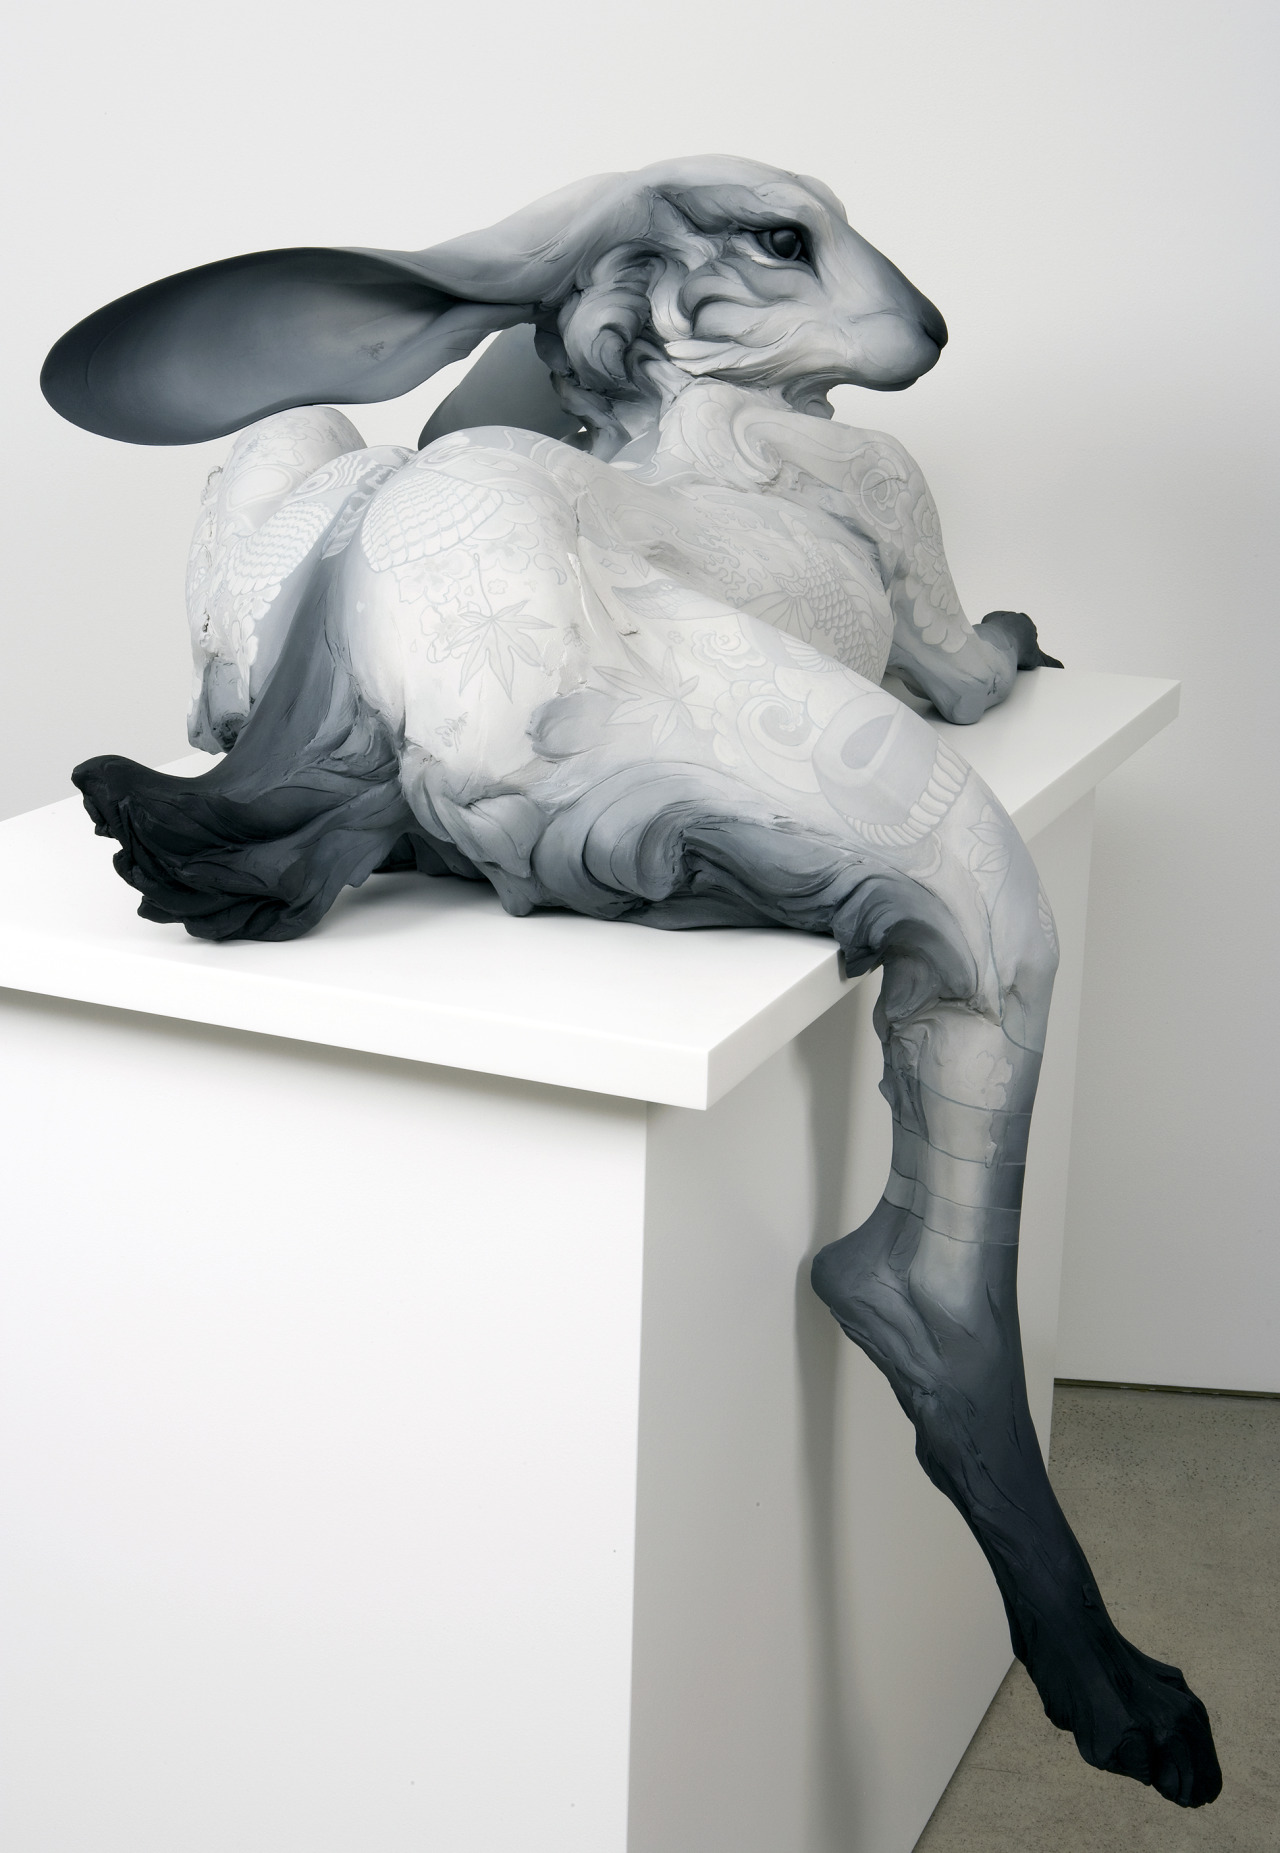  Come Undone  by  Beth Cavener StichterA gallery of ceramic sculpture. It’s